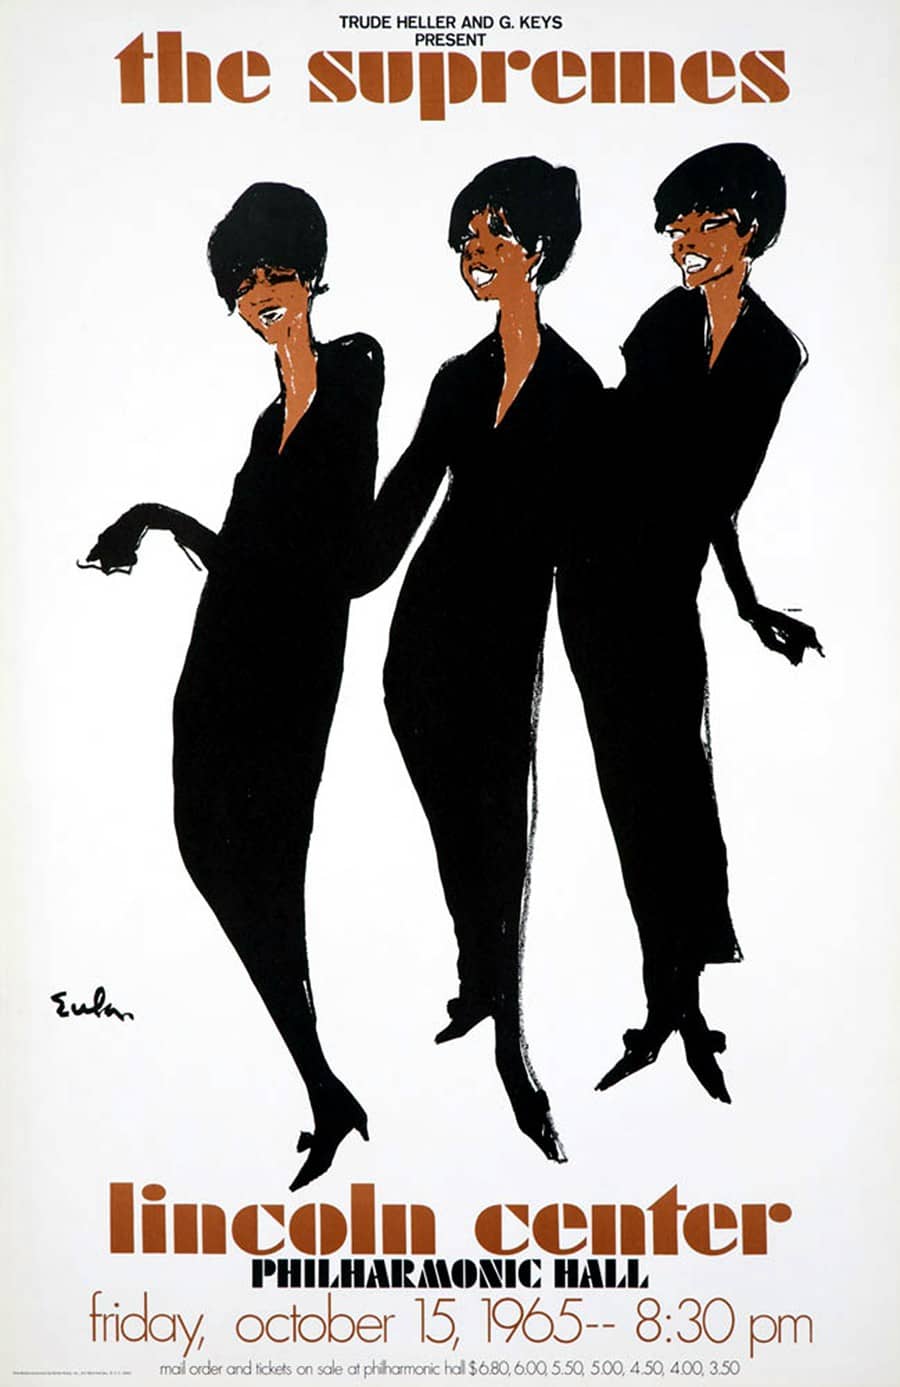 The Supremes at Lincoln Center Original Vintage Poster 1965 by Joe Eula